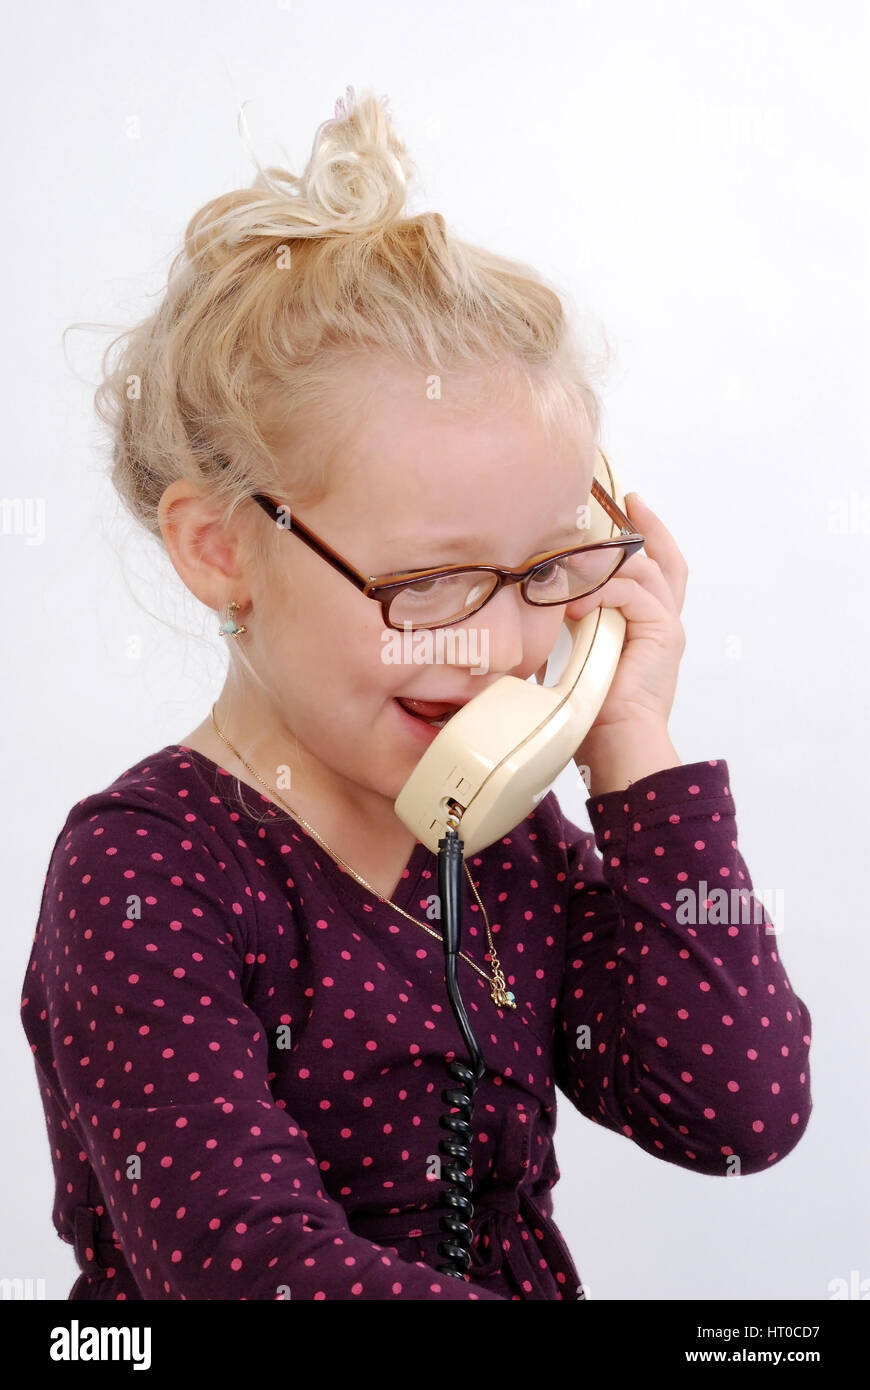 Kleines M?dchen telefoniert - little girl with telephone Stock Photo